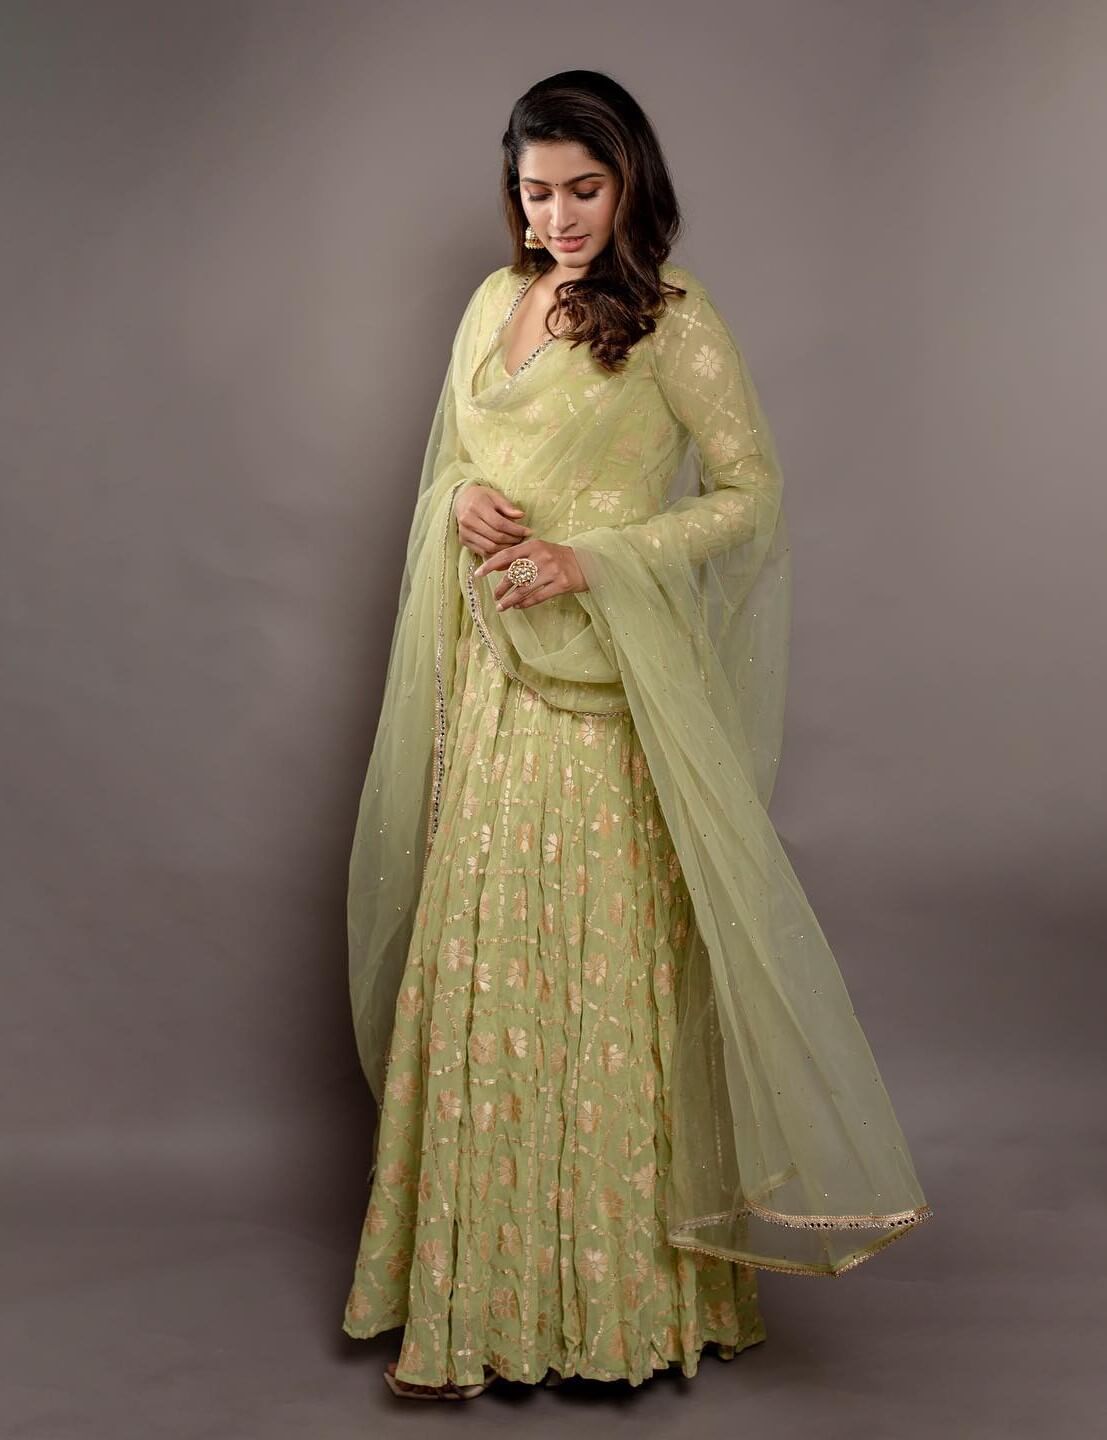 Tanya Ravichandran Look Pretty In Green Frock Suit Outfit